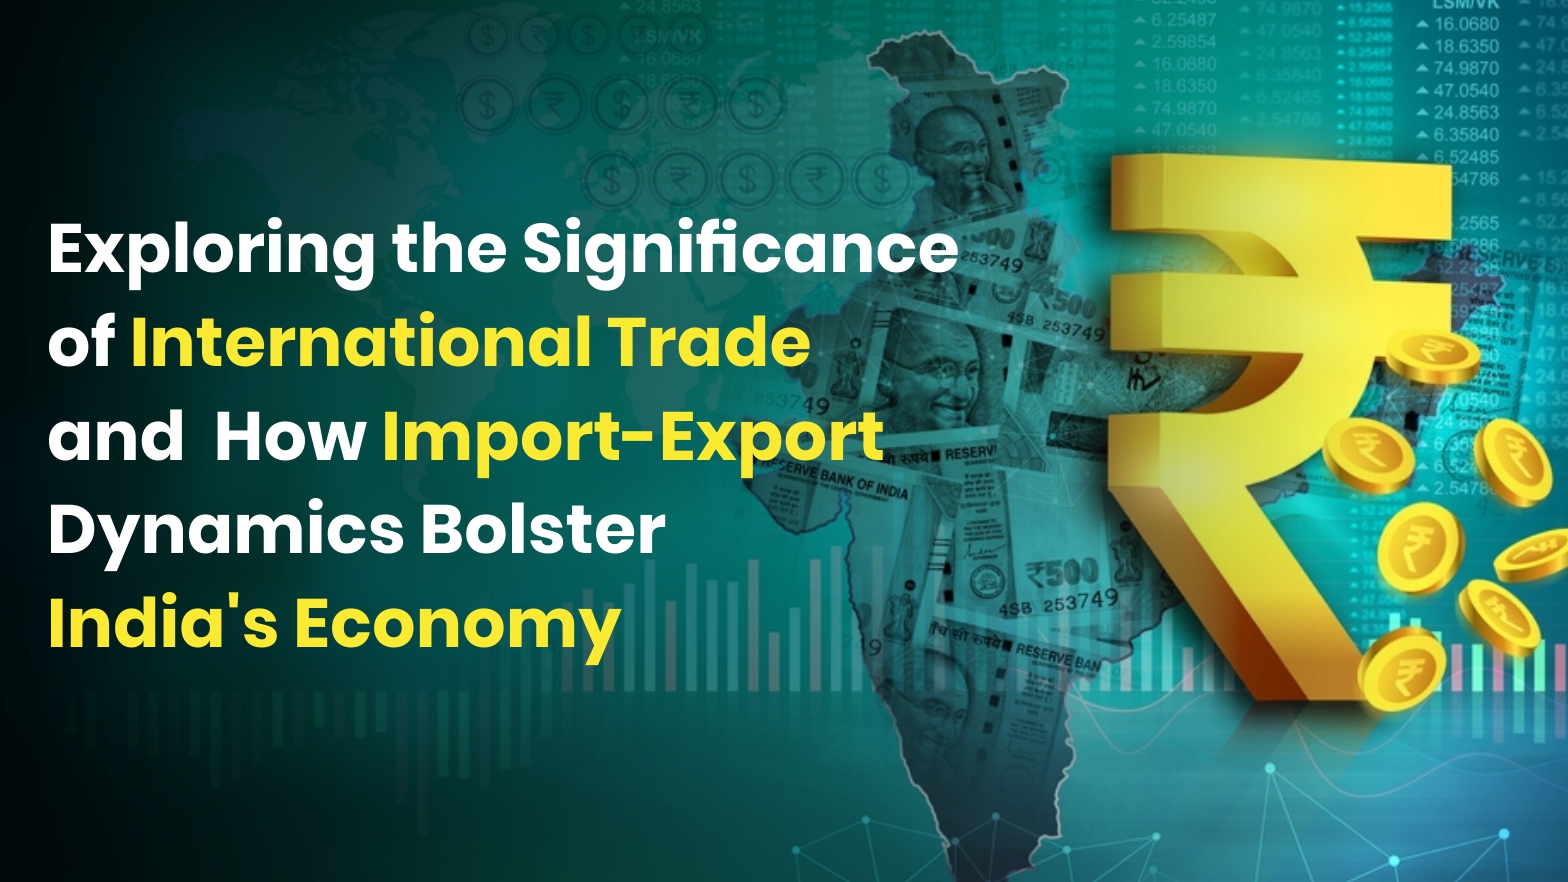 How Import-Export Dynamics Bolster India's Economy